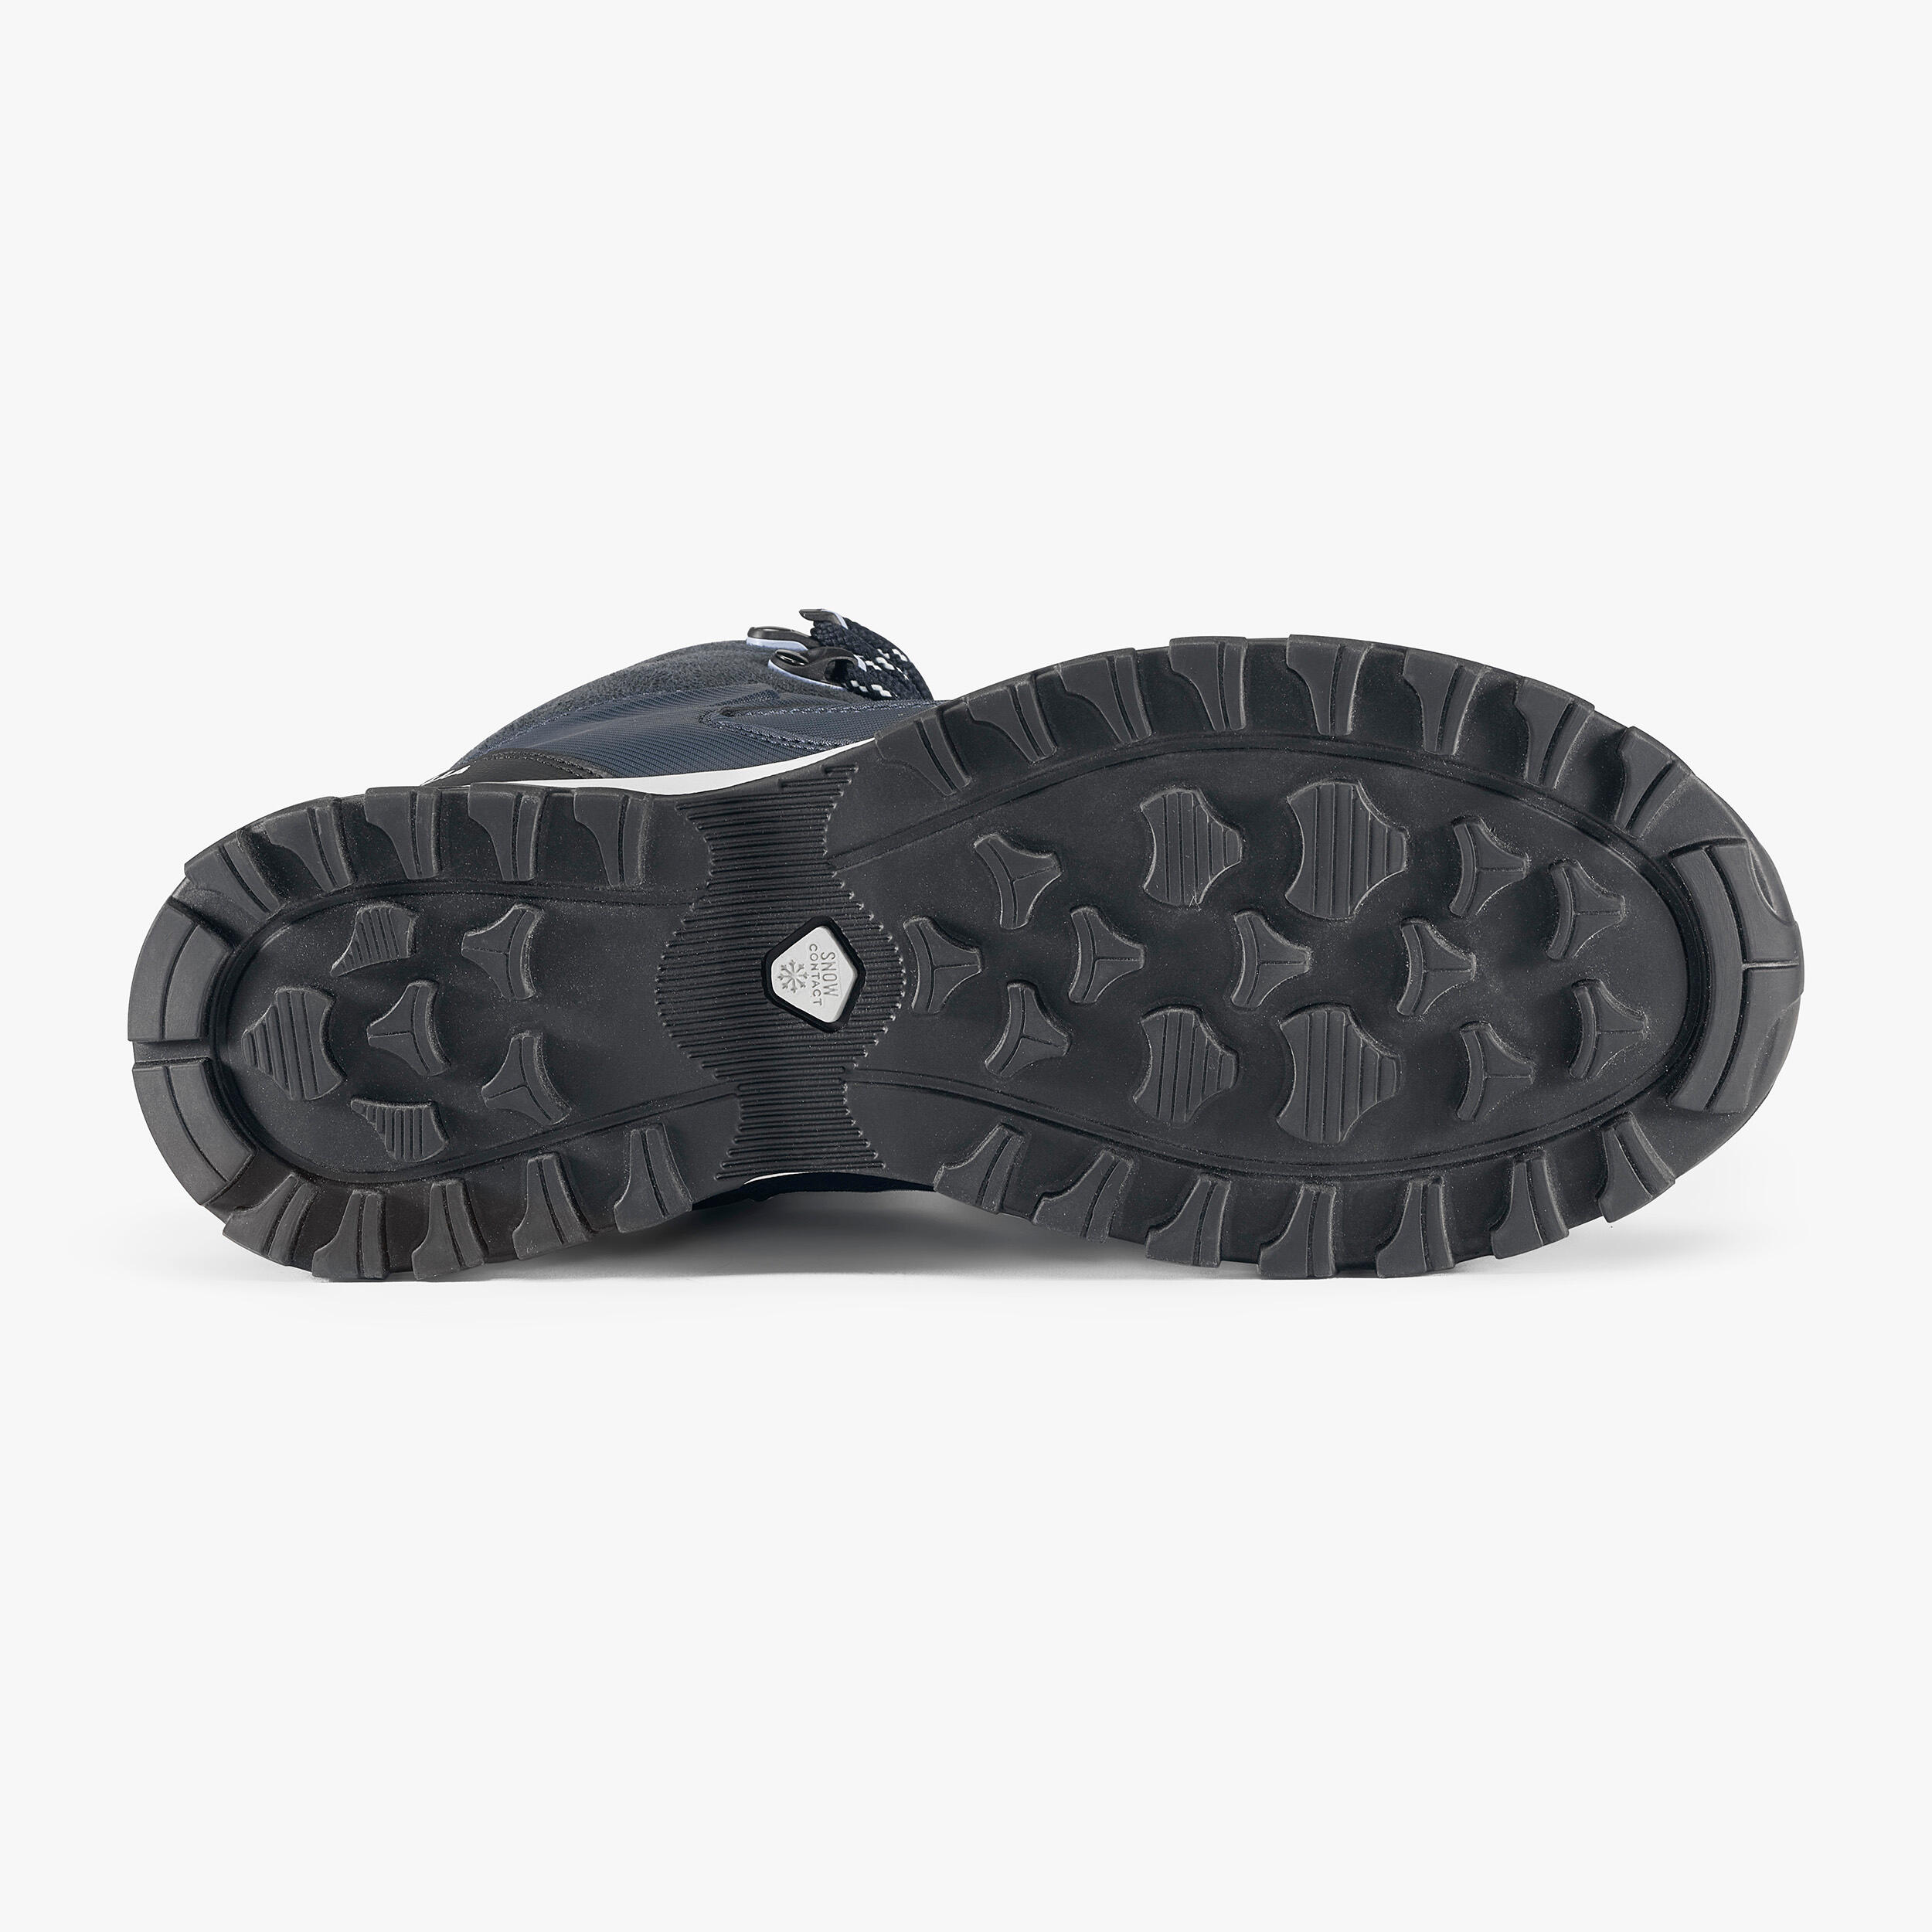 Women’s warm and waterproof hiking shoes - SH500 Mountain MID 4/7